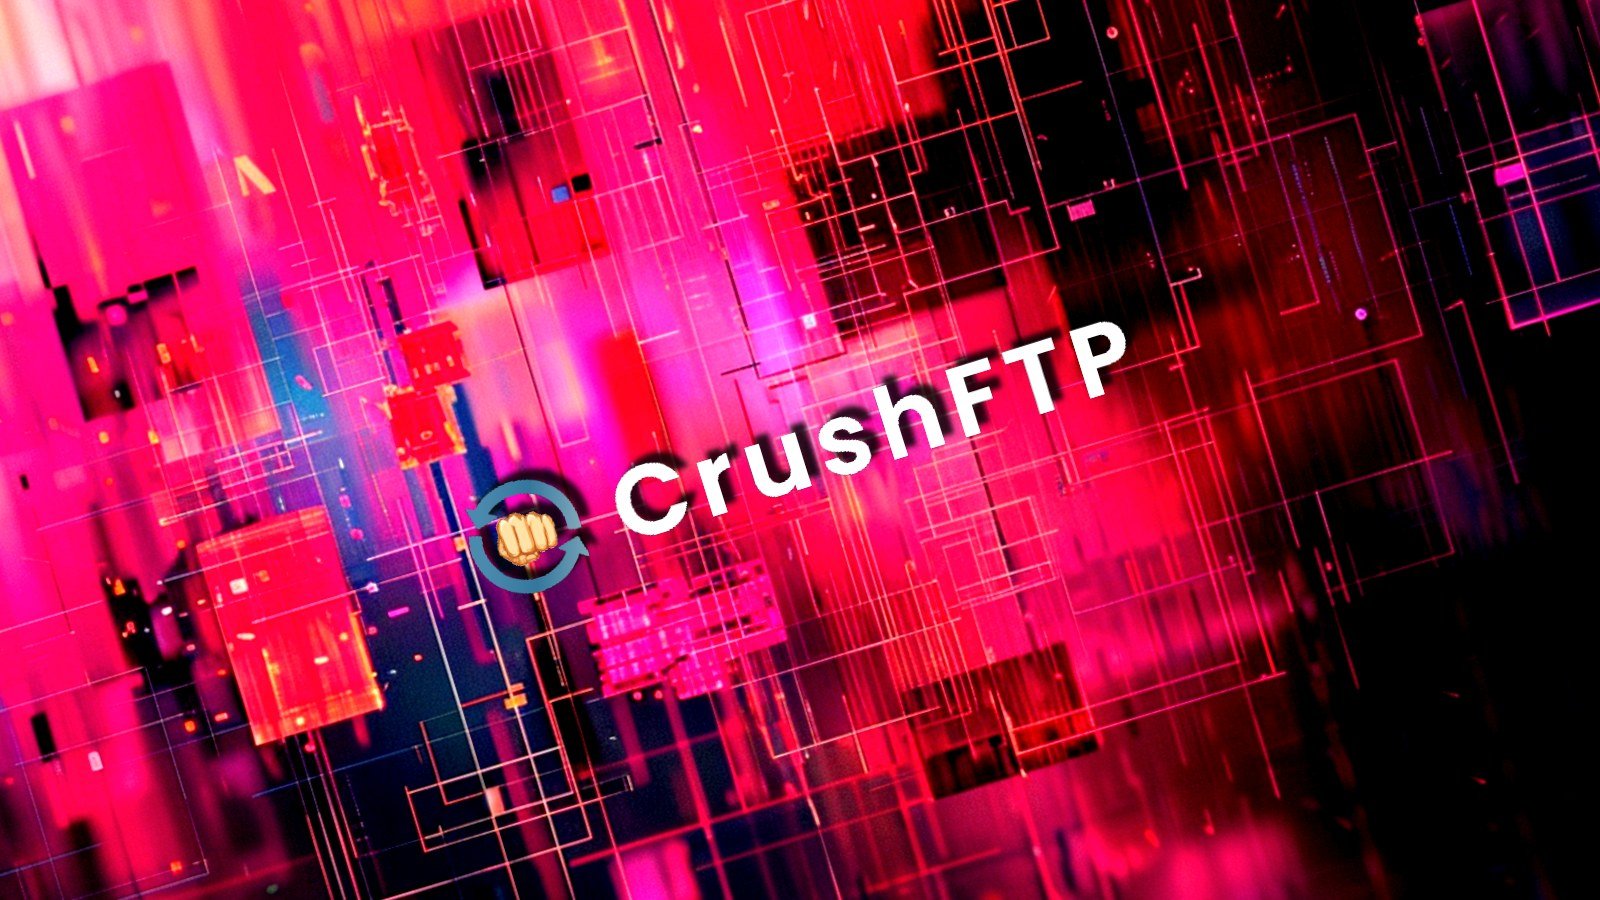 crushftp-warns-users-to-patch-exploited-zero-day-“immediately”